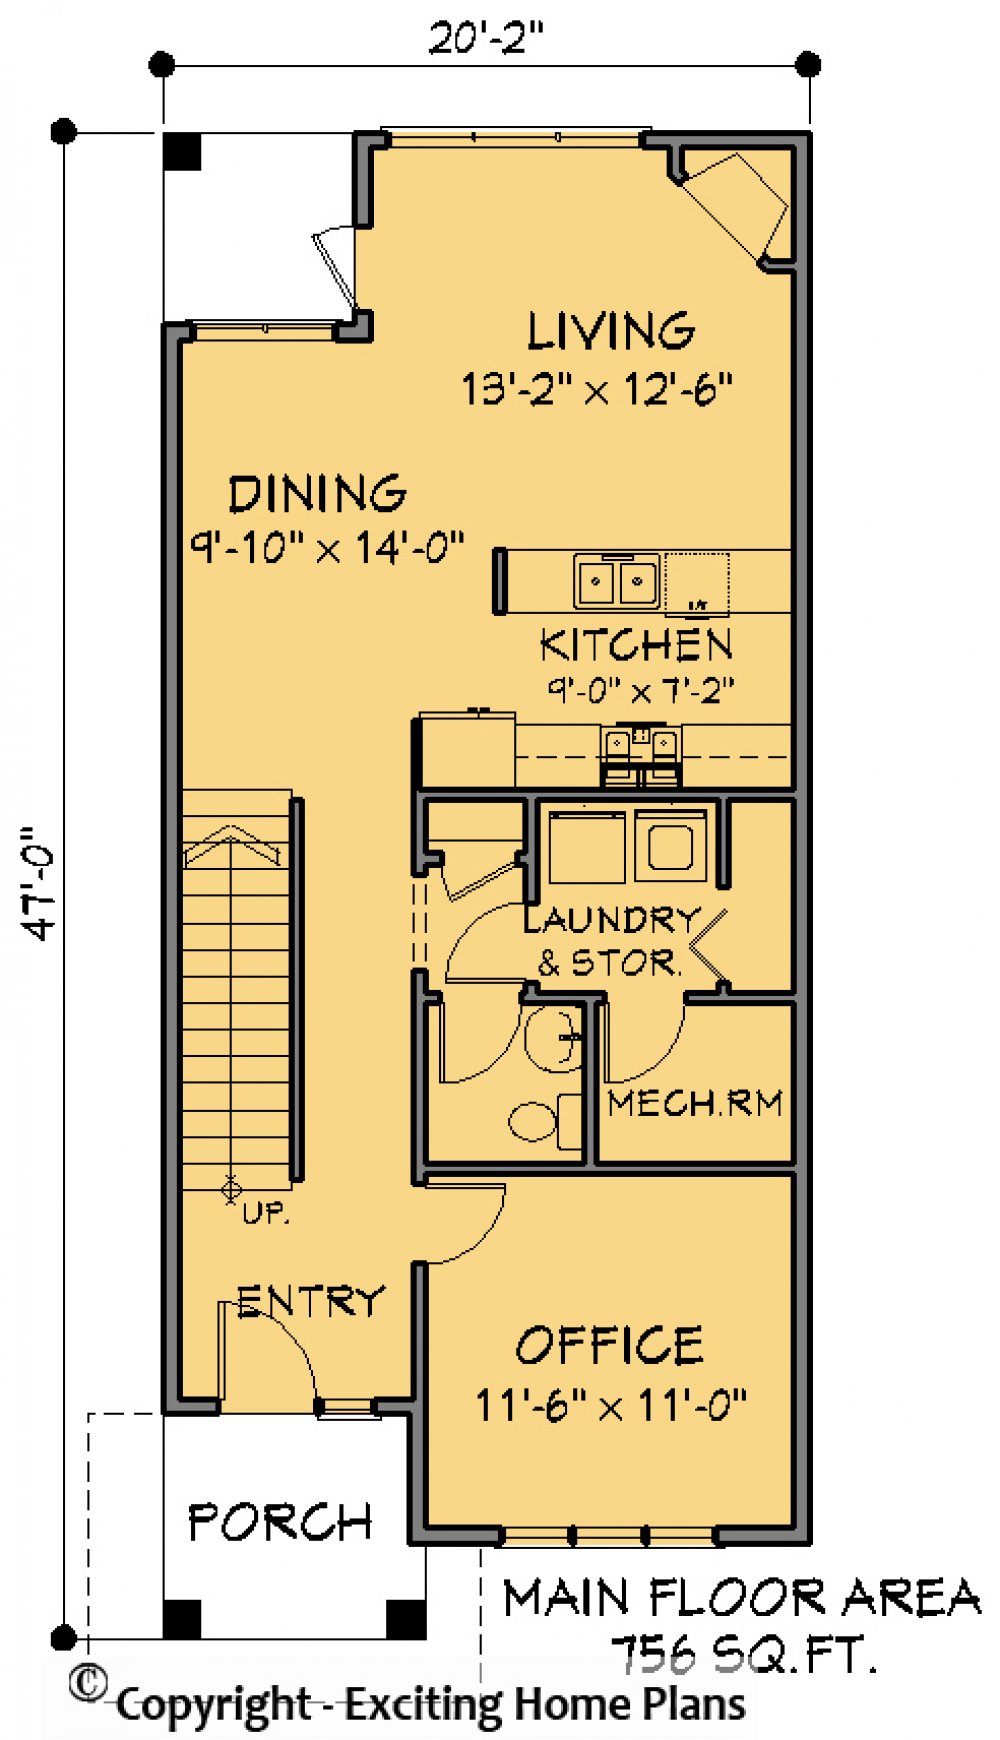 House Plan E1563-10  Main Floor Plan